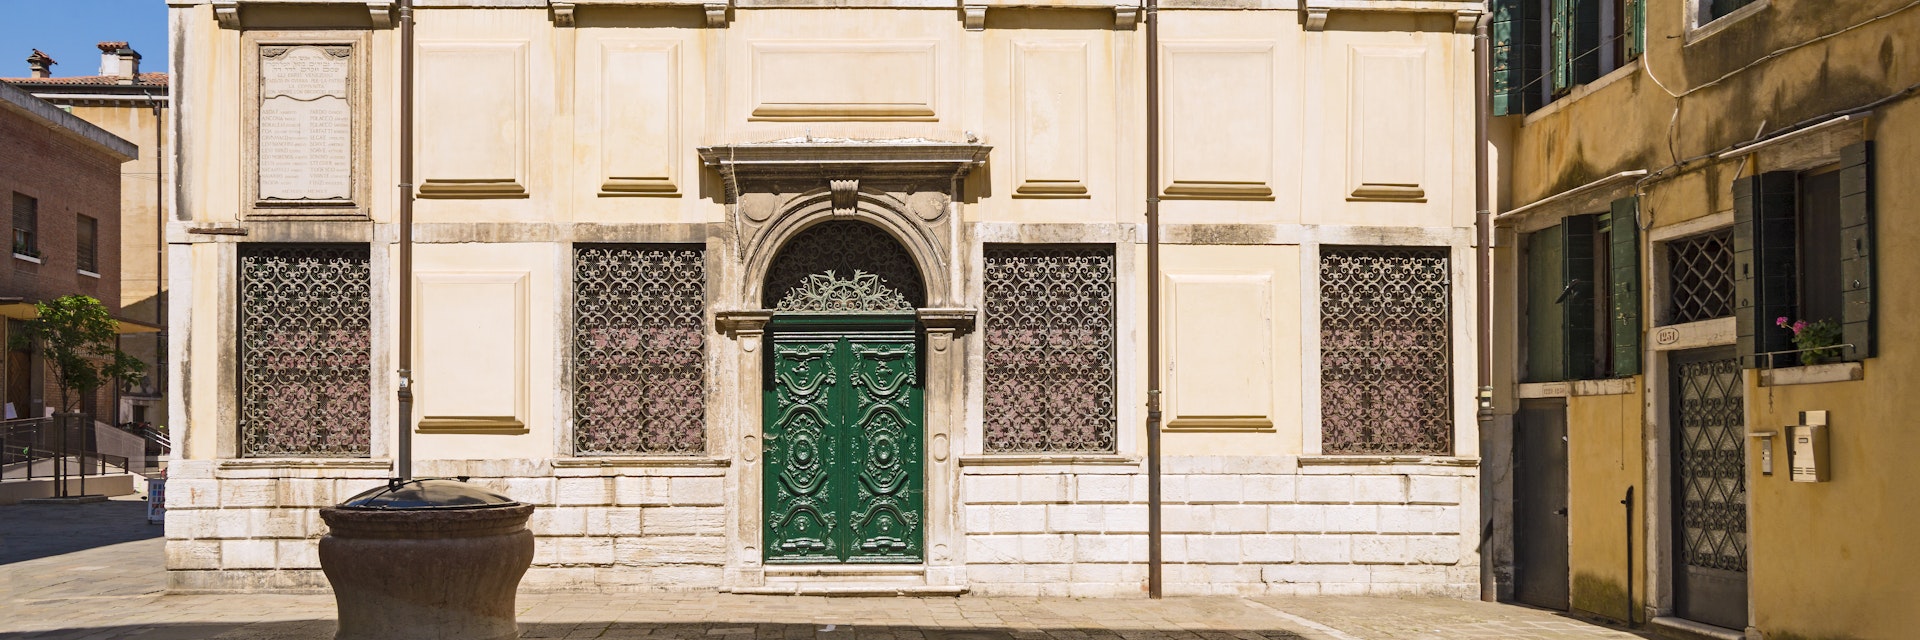 Facade of "Schola" (ie synagogue) "Levantine" (the XVIII cent.), In the Campo delle Scole ghetto of Venice

SOURCE: https://commons.wikimedia.org/wiki/File:Schola_levantina_Facciata.jpg